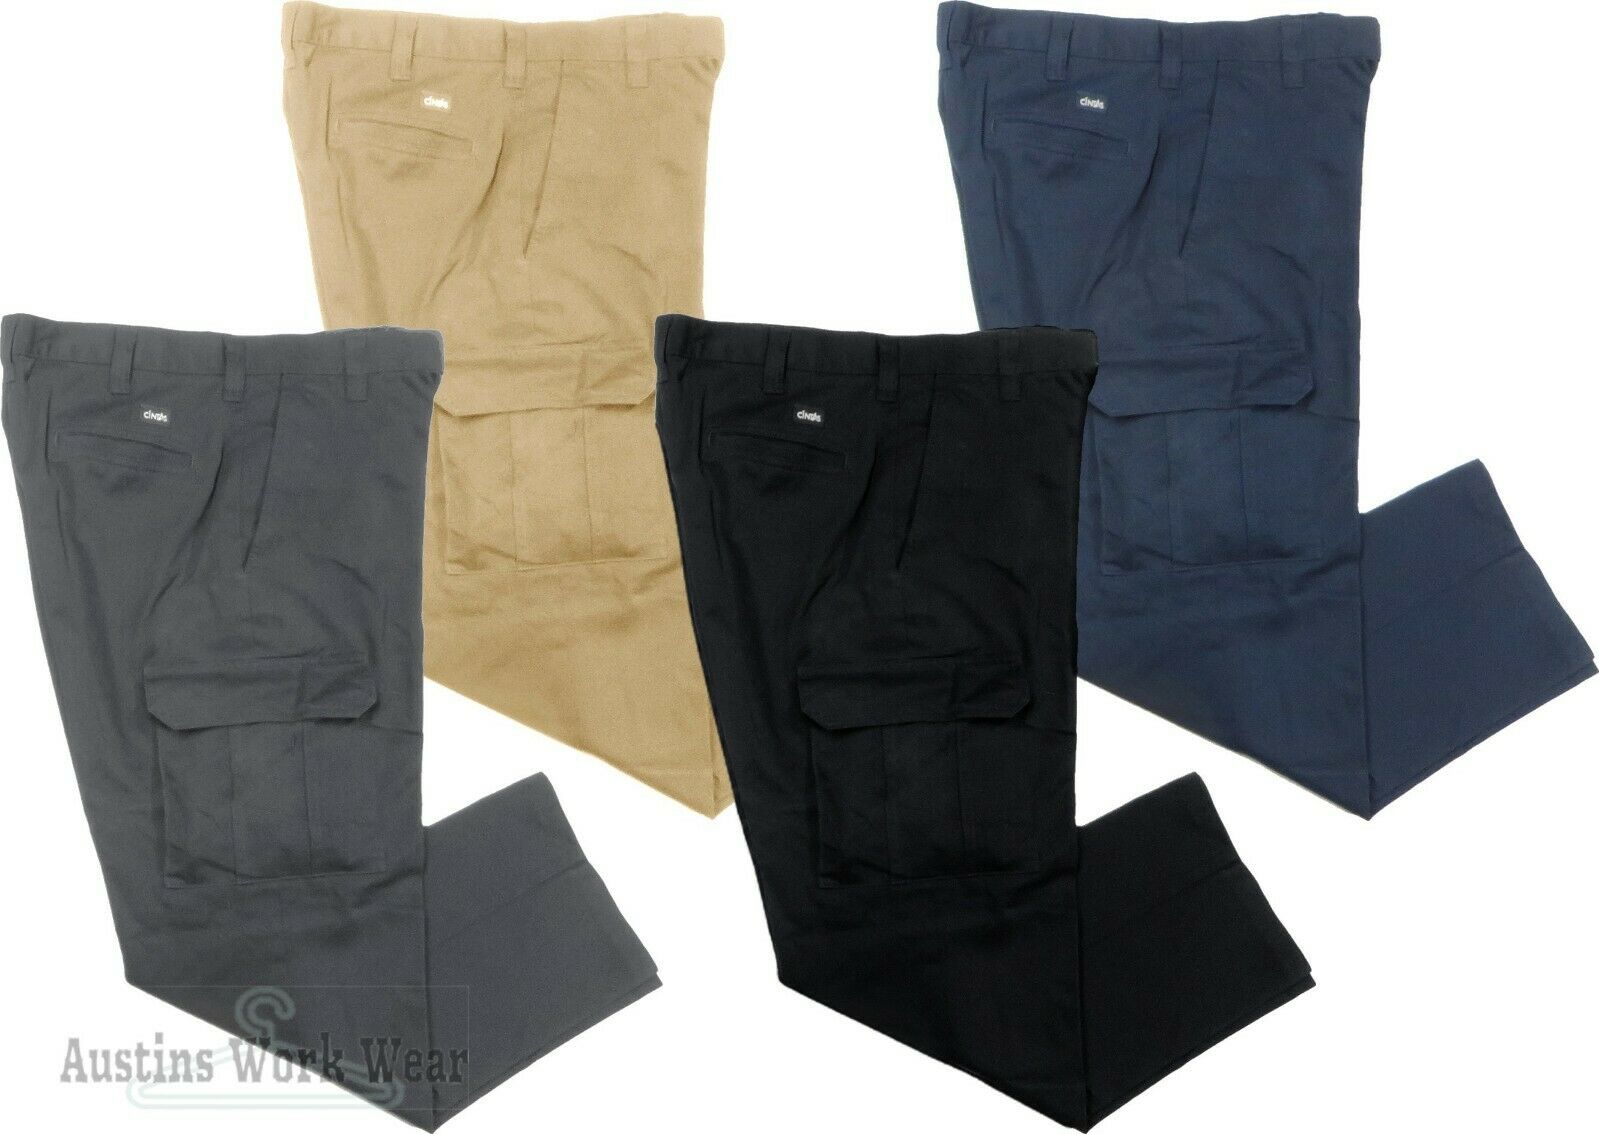 Cargo Work Pants Uniform Used Cintas Unifirst Dickies Redkap Navy Black Gray Tan